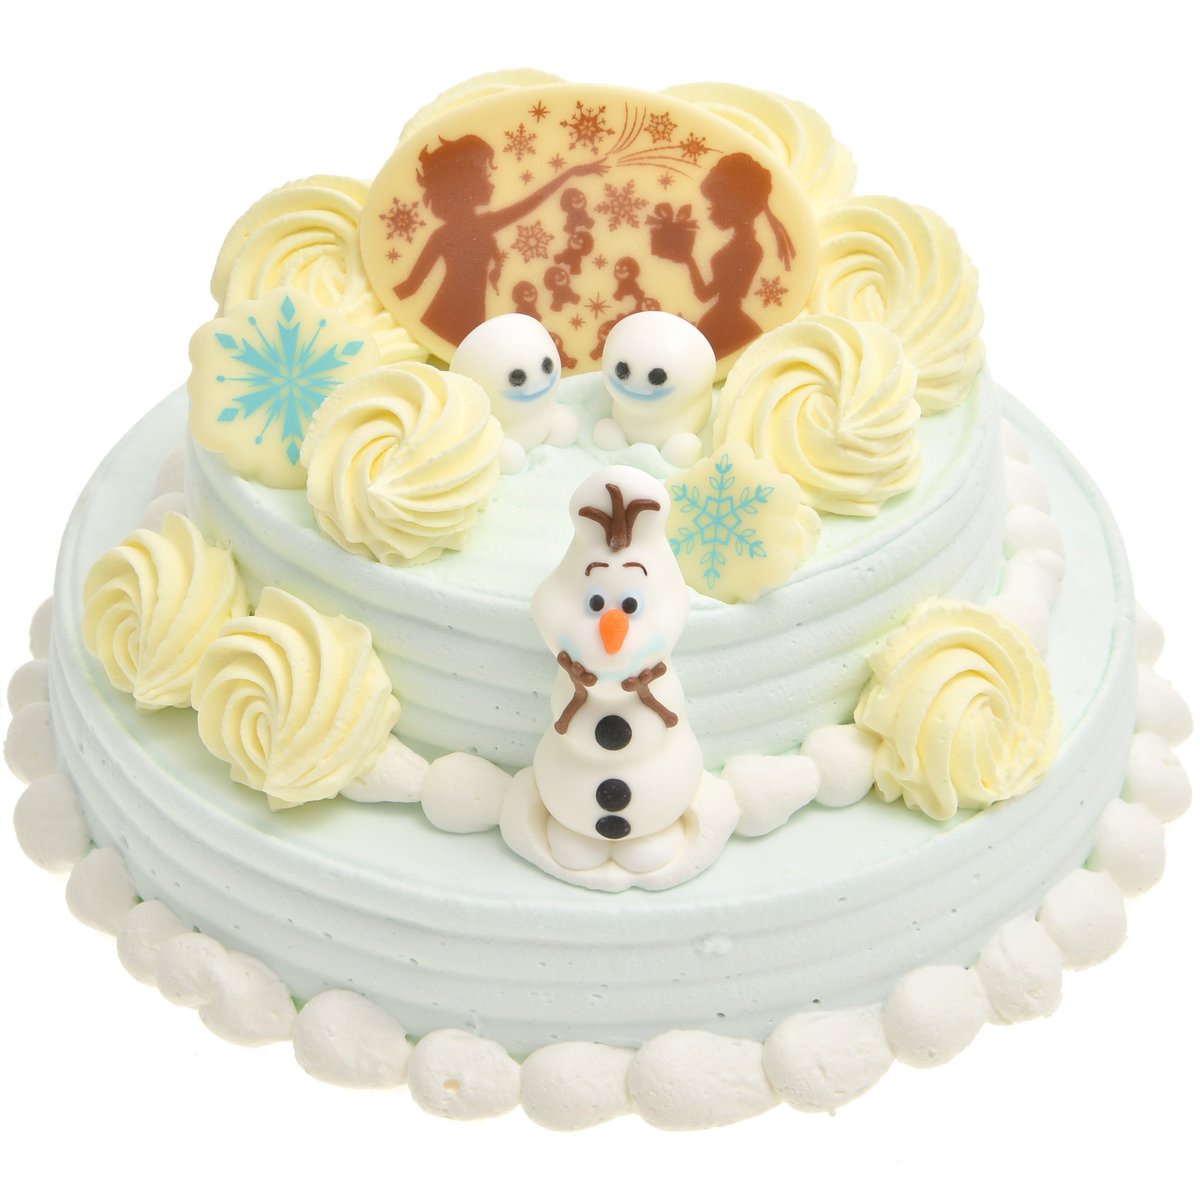 Mezzomikiのディズニーブログ Auf Twitter エルサのサプライズでオラフがつまみ食いしたあのケーキを徹底再現 31アイスクリーム アナと雪の女王サプライズクリスマスケーキ T Co 8ji3dbcmm1 T Co Ak6vgkhvbz